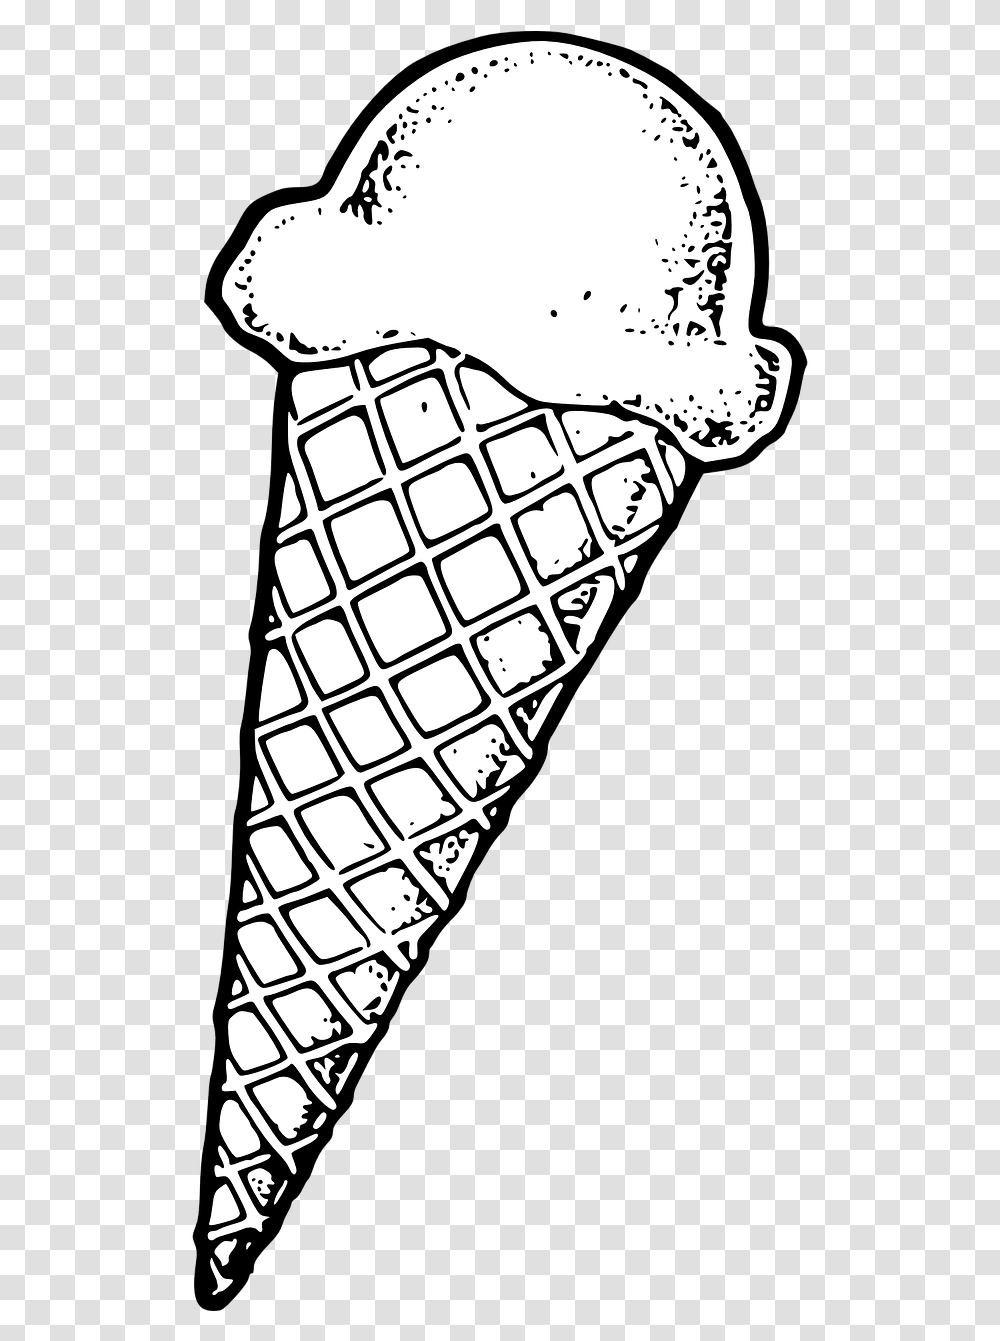 Ice Cream Cone Line Art, Apparel, Grenade, Bomb Transparent Png